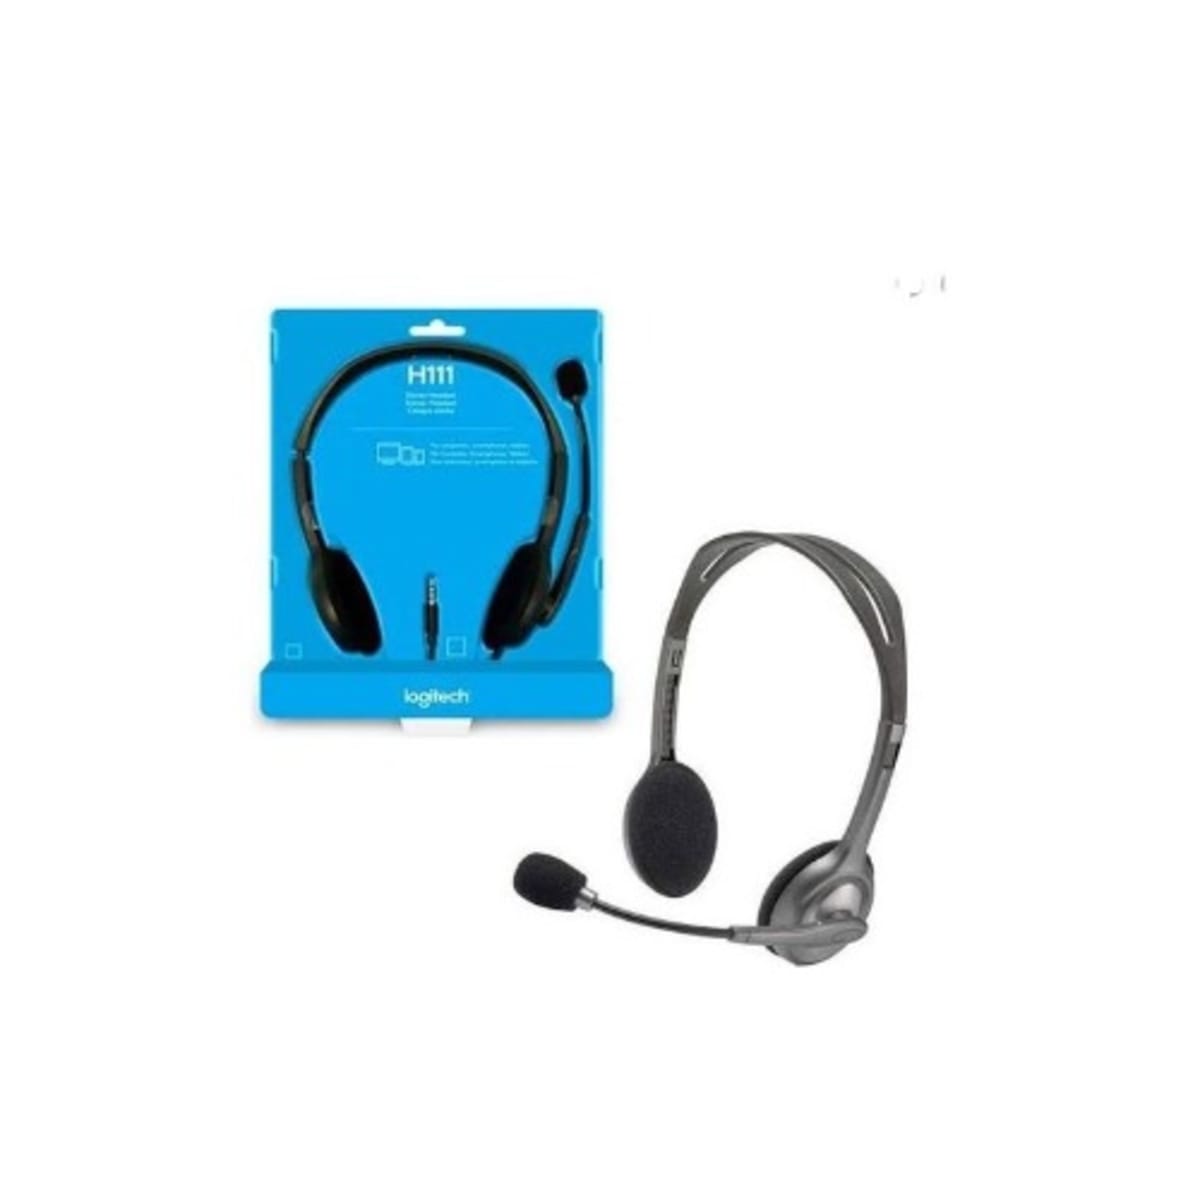 H111 | Headset Online Logitech 3.5mm Konga Stereo Shopping Multi-device